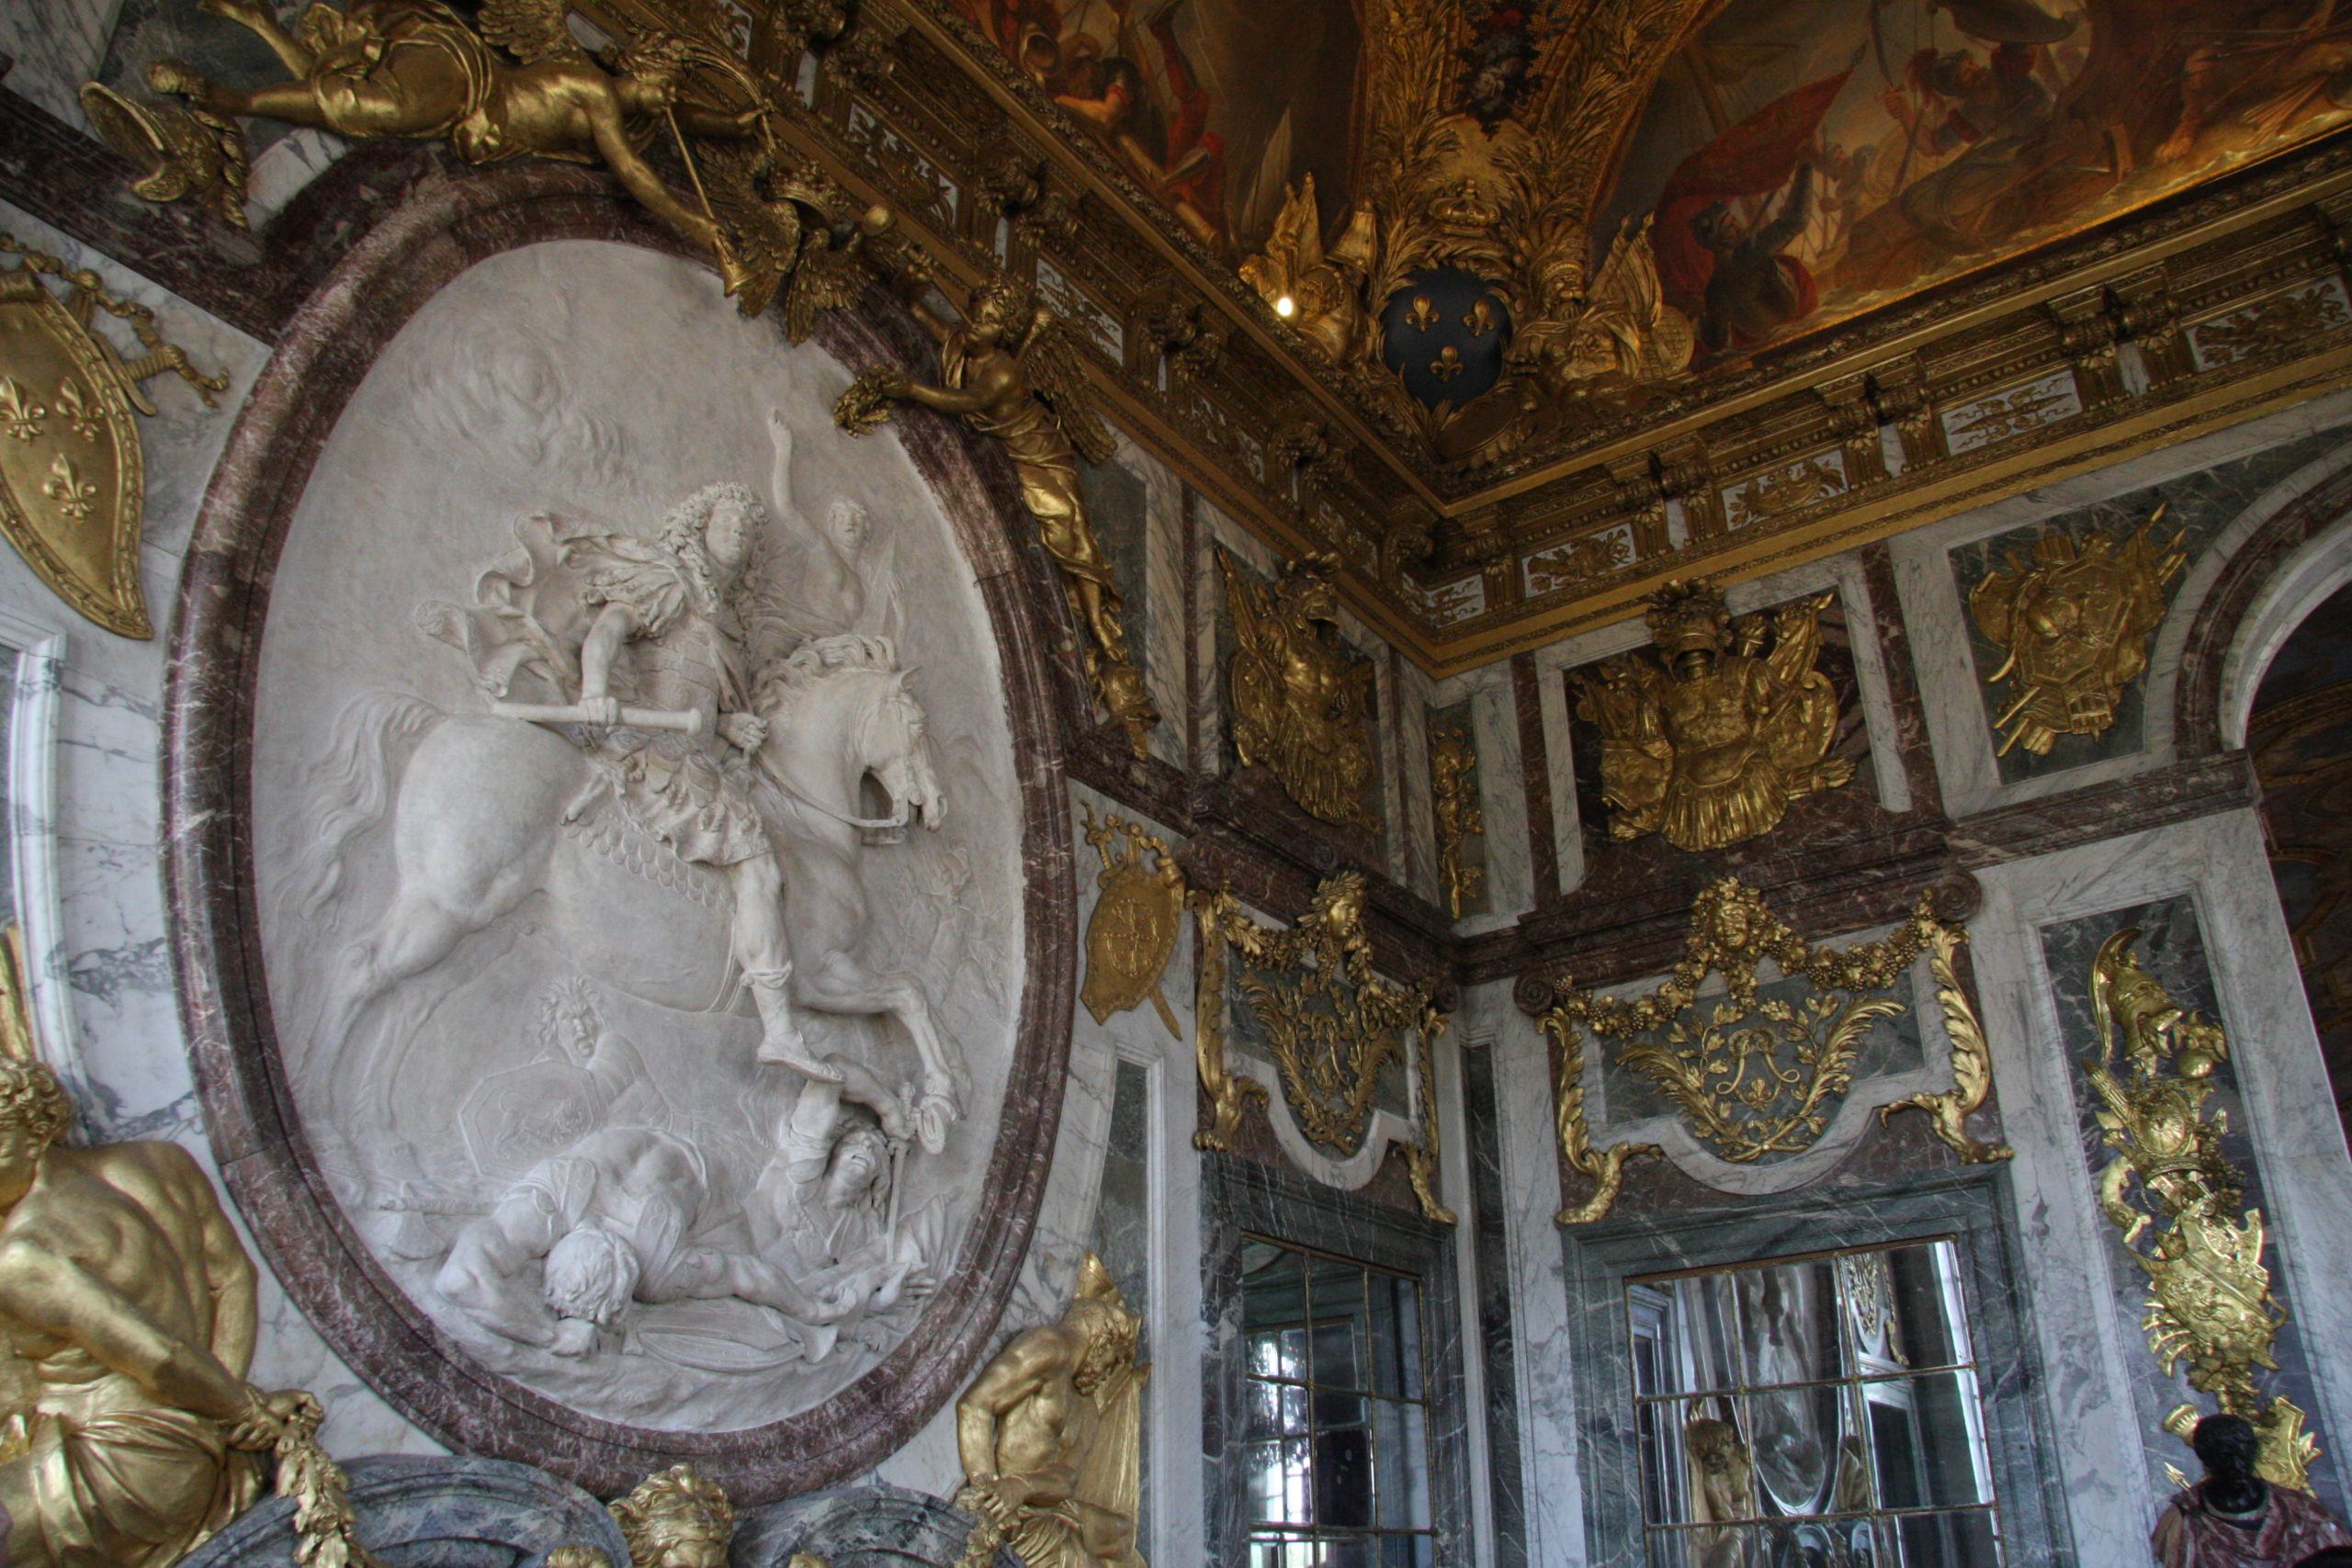 France, Versailles, Allegorical portrait of King Louis XIV